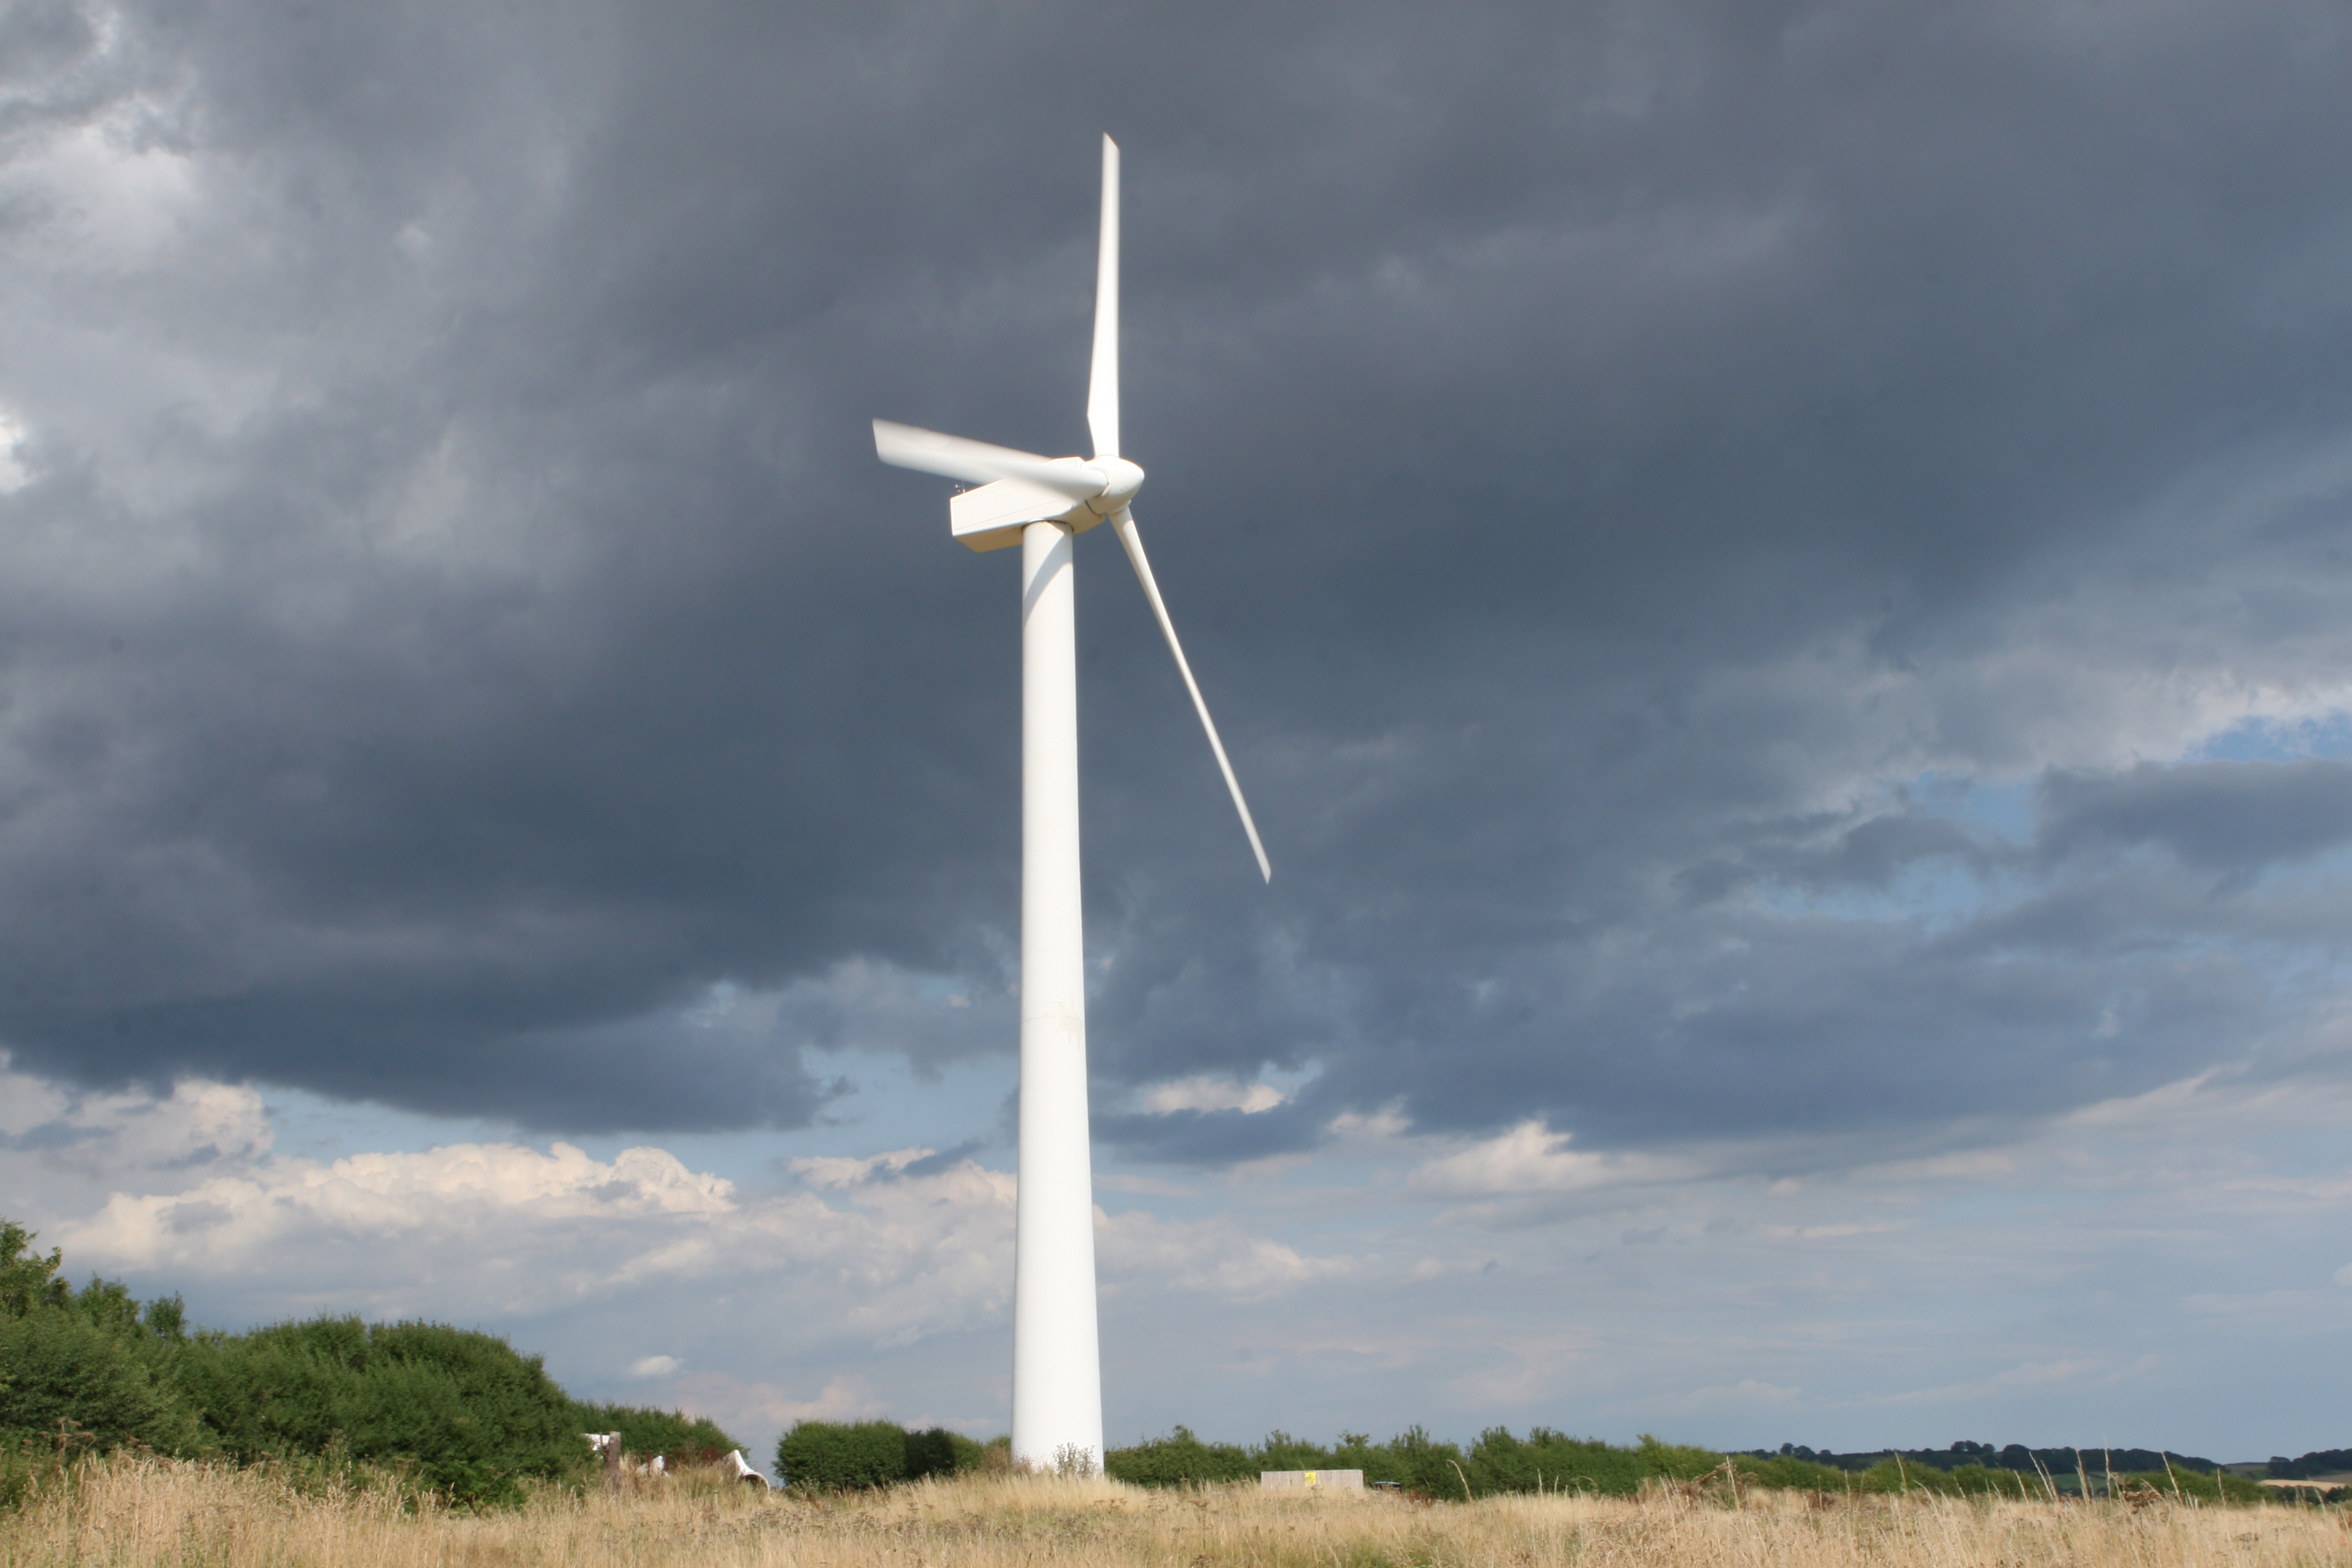 Vestas V39 500kW wind turbine located near Bere Regis, Dorset